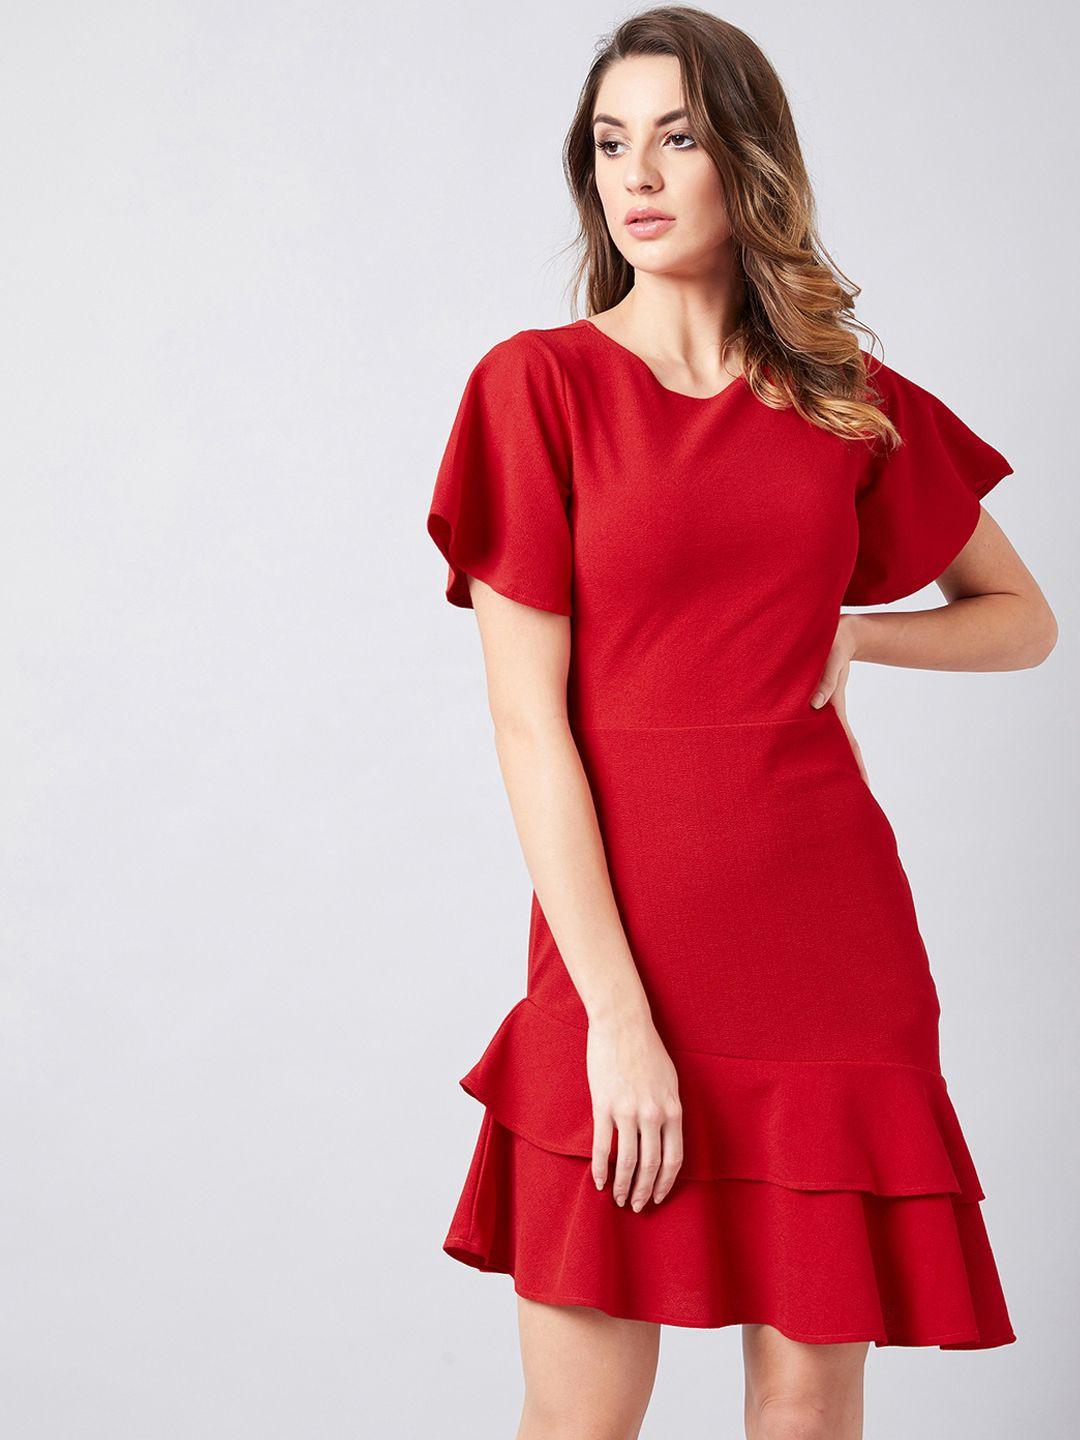 athena women red solid sheath dress